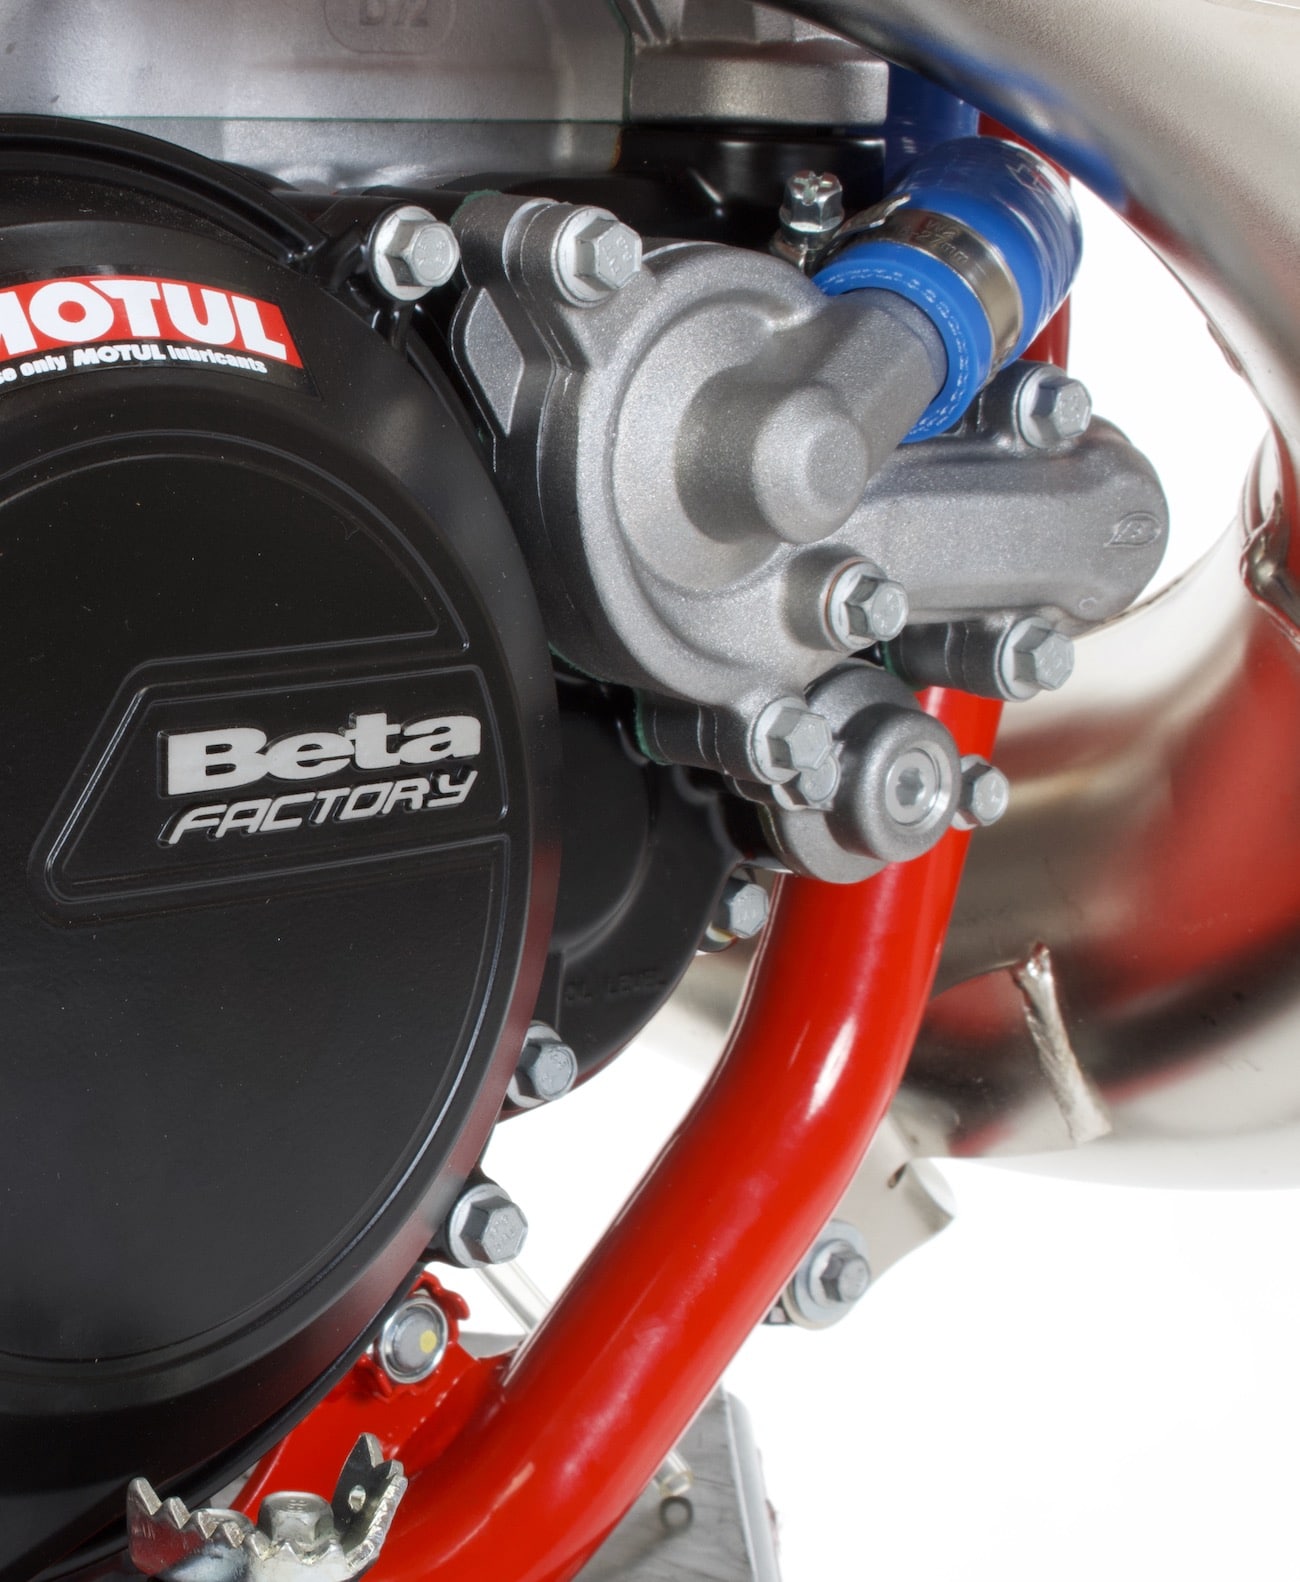 MXA RACE TEST: THE REAL TEST OF THE 2021 BETA 300RX MOTOCROSS